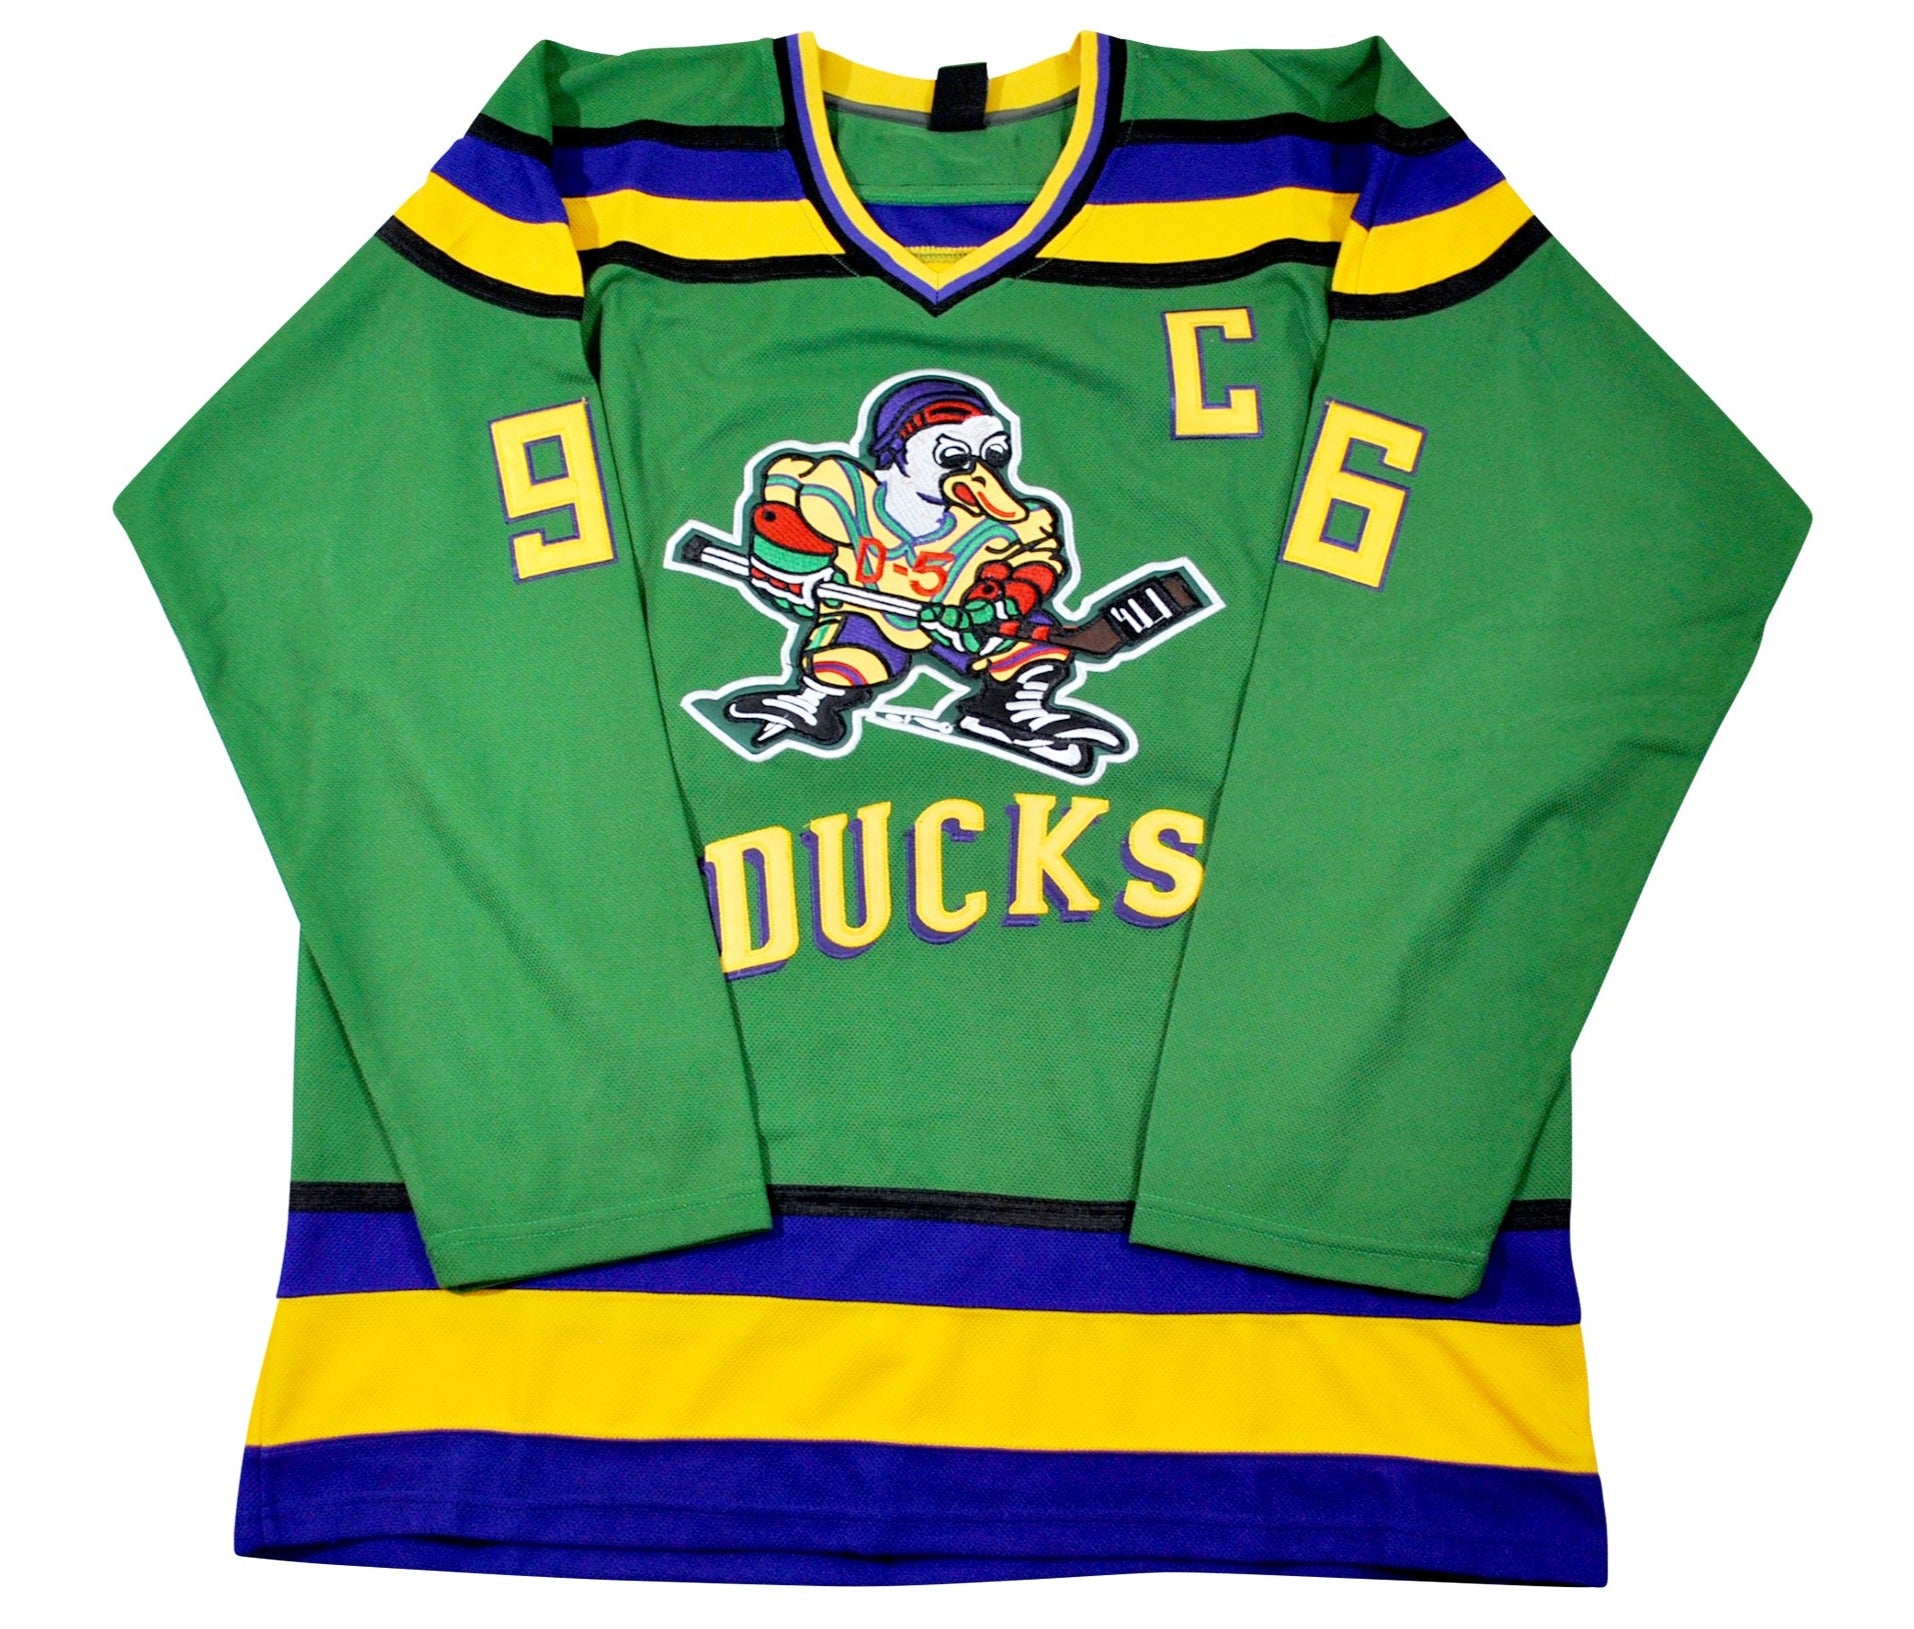 Vintage Mighty Ducks jersey